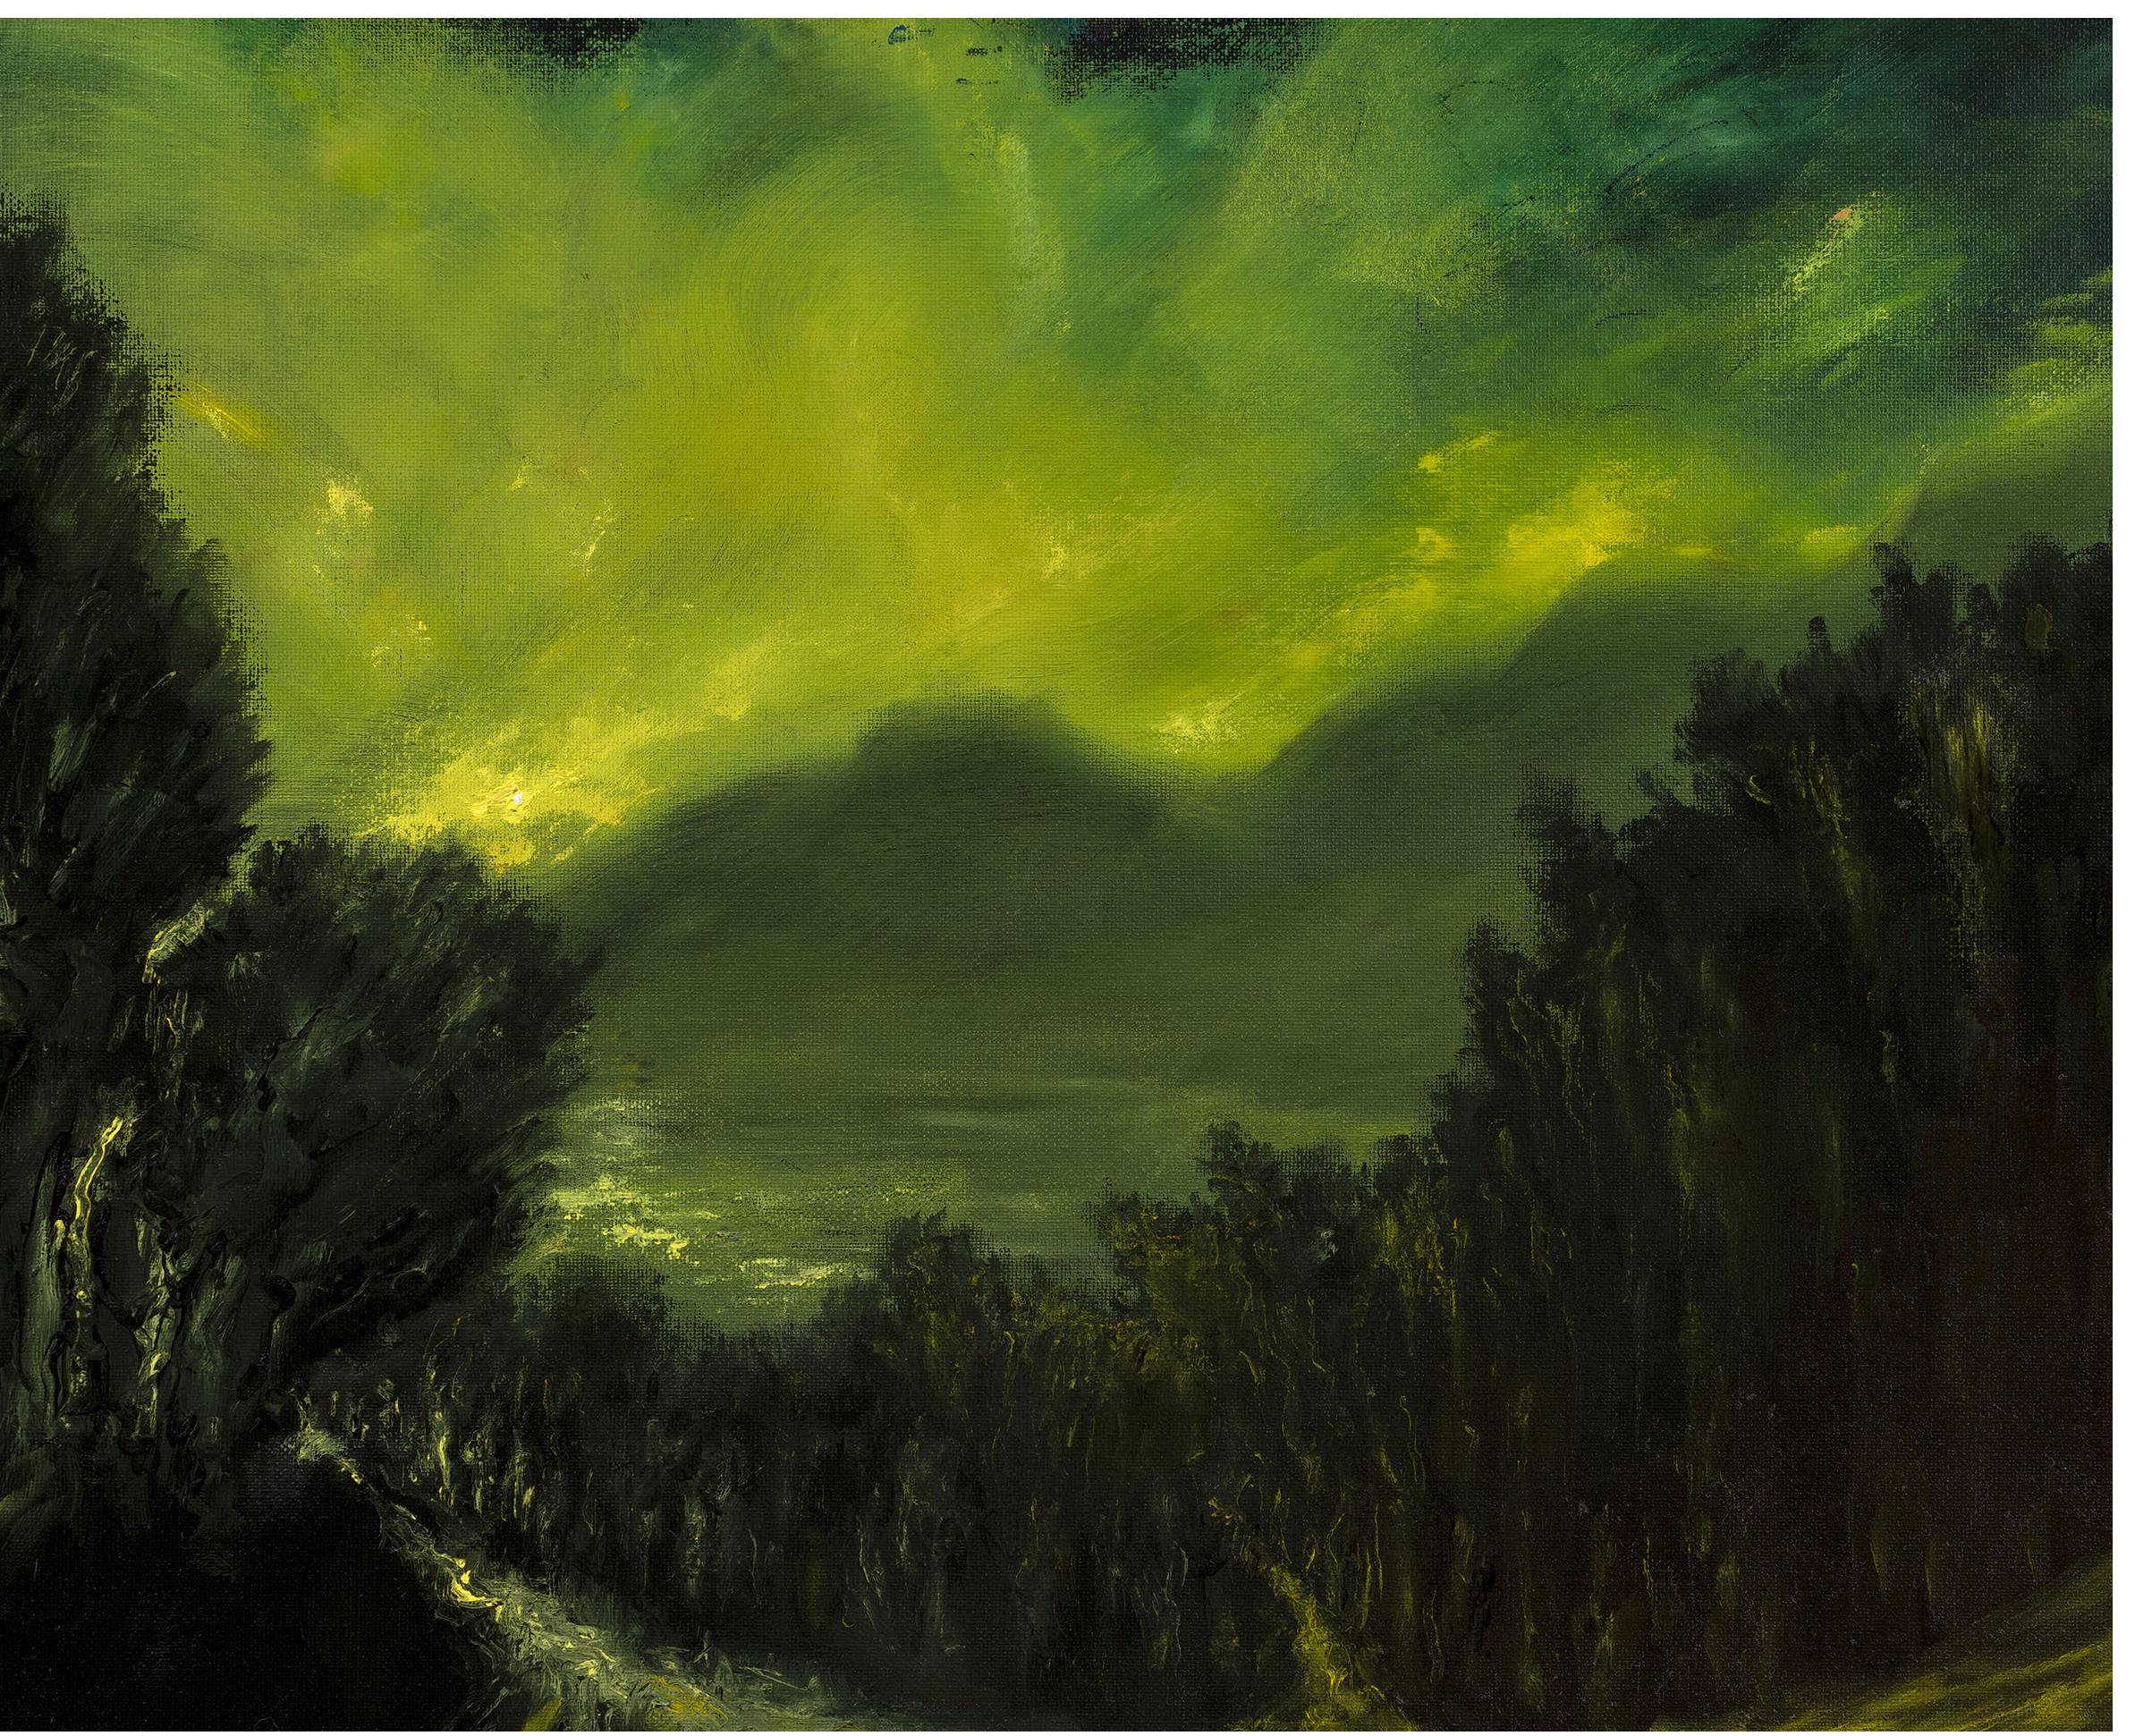 Matthew Bateson - "To The River", oil on canvas board, 40 x 50 cm